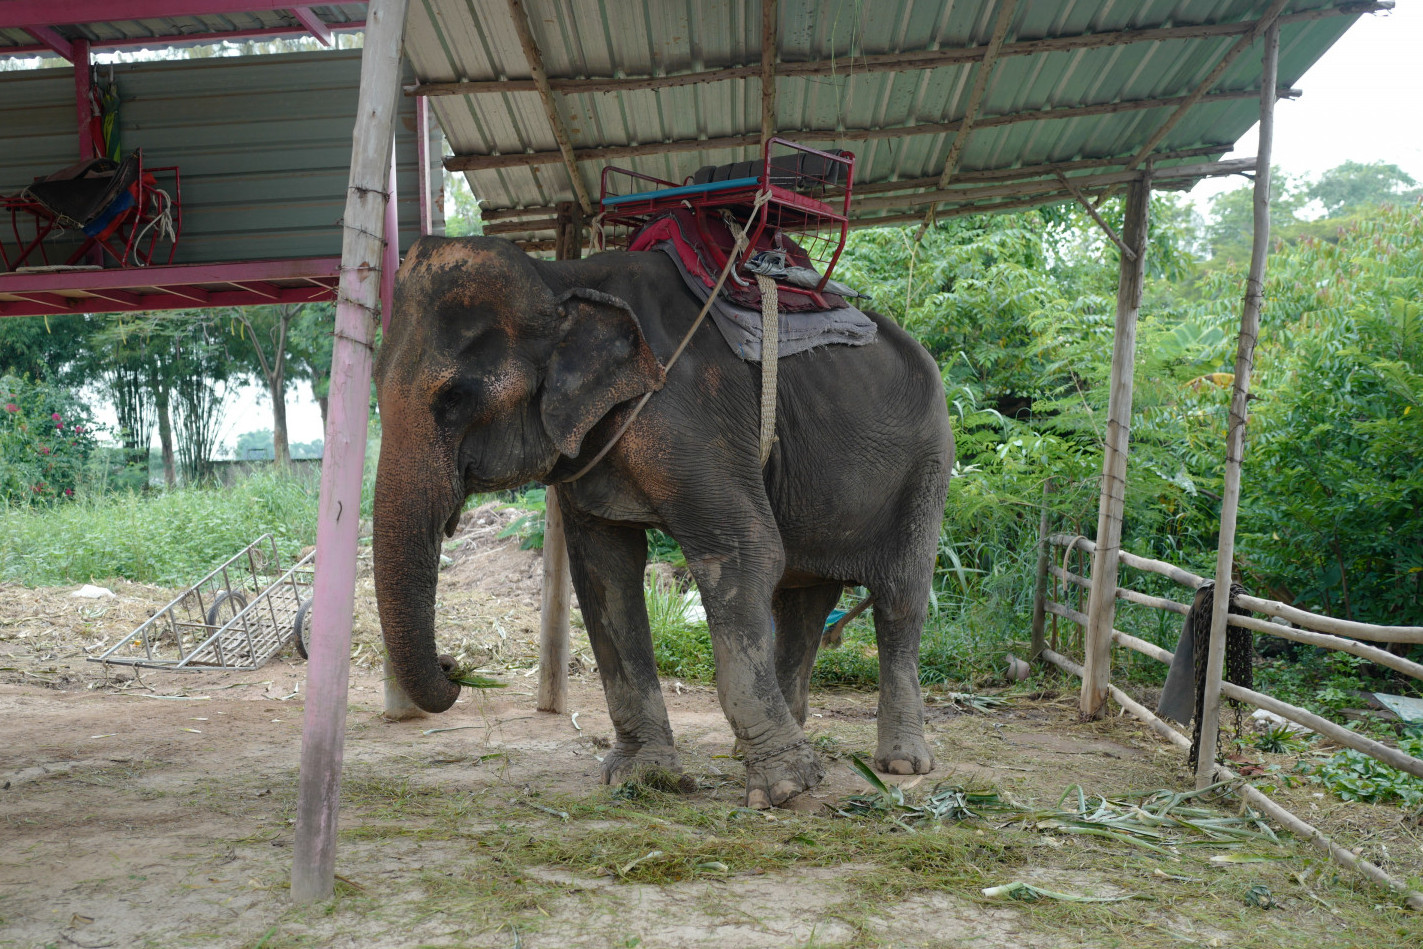 An elephant in a poor welfare venue